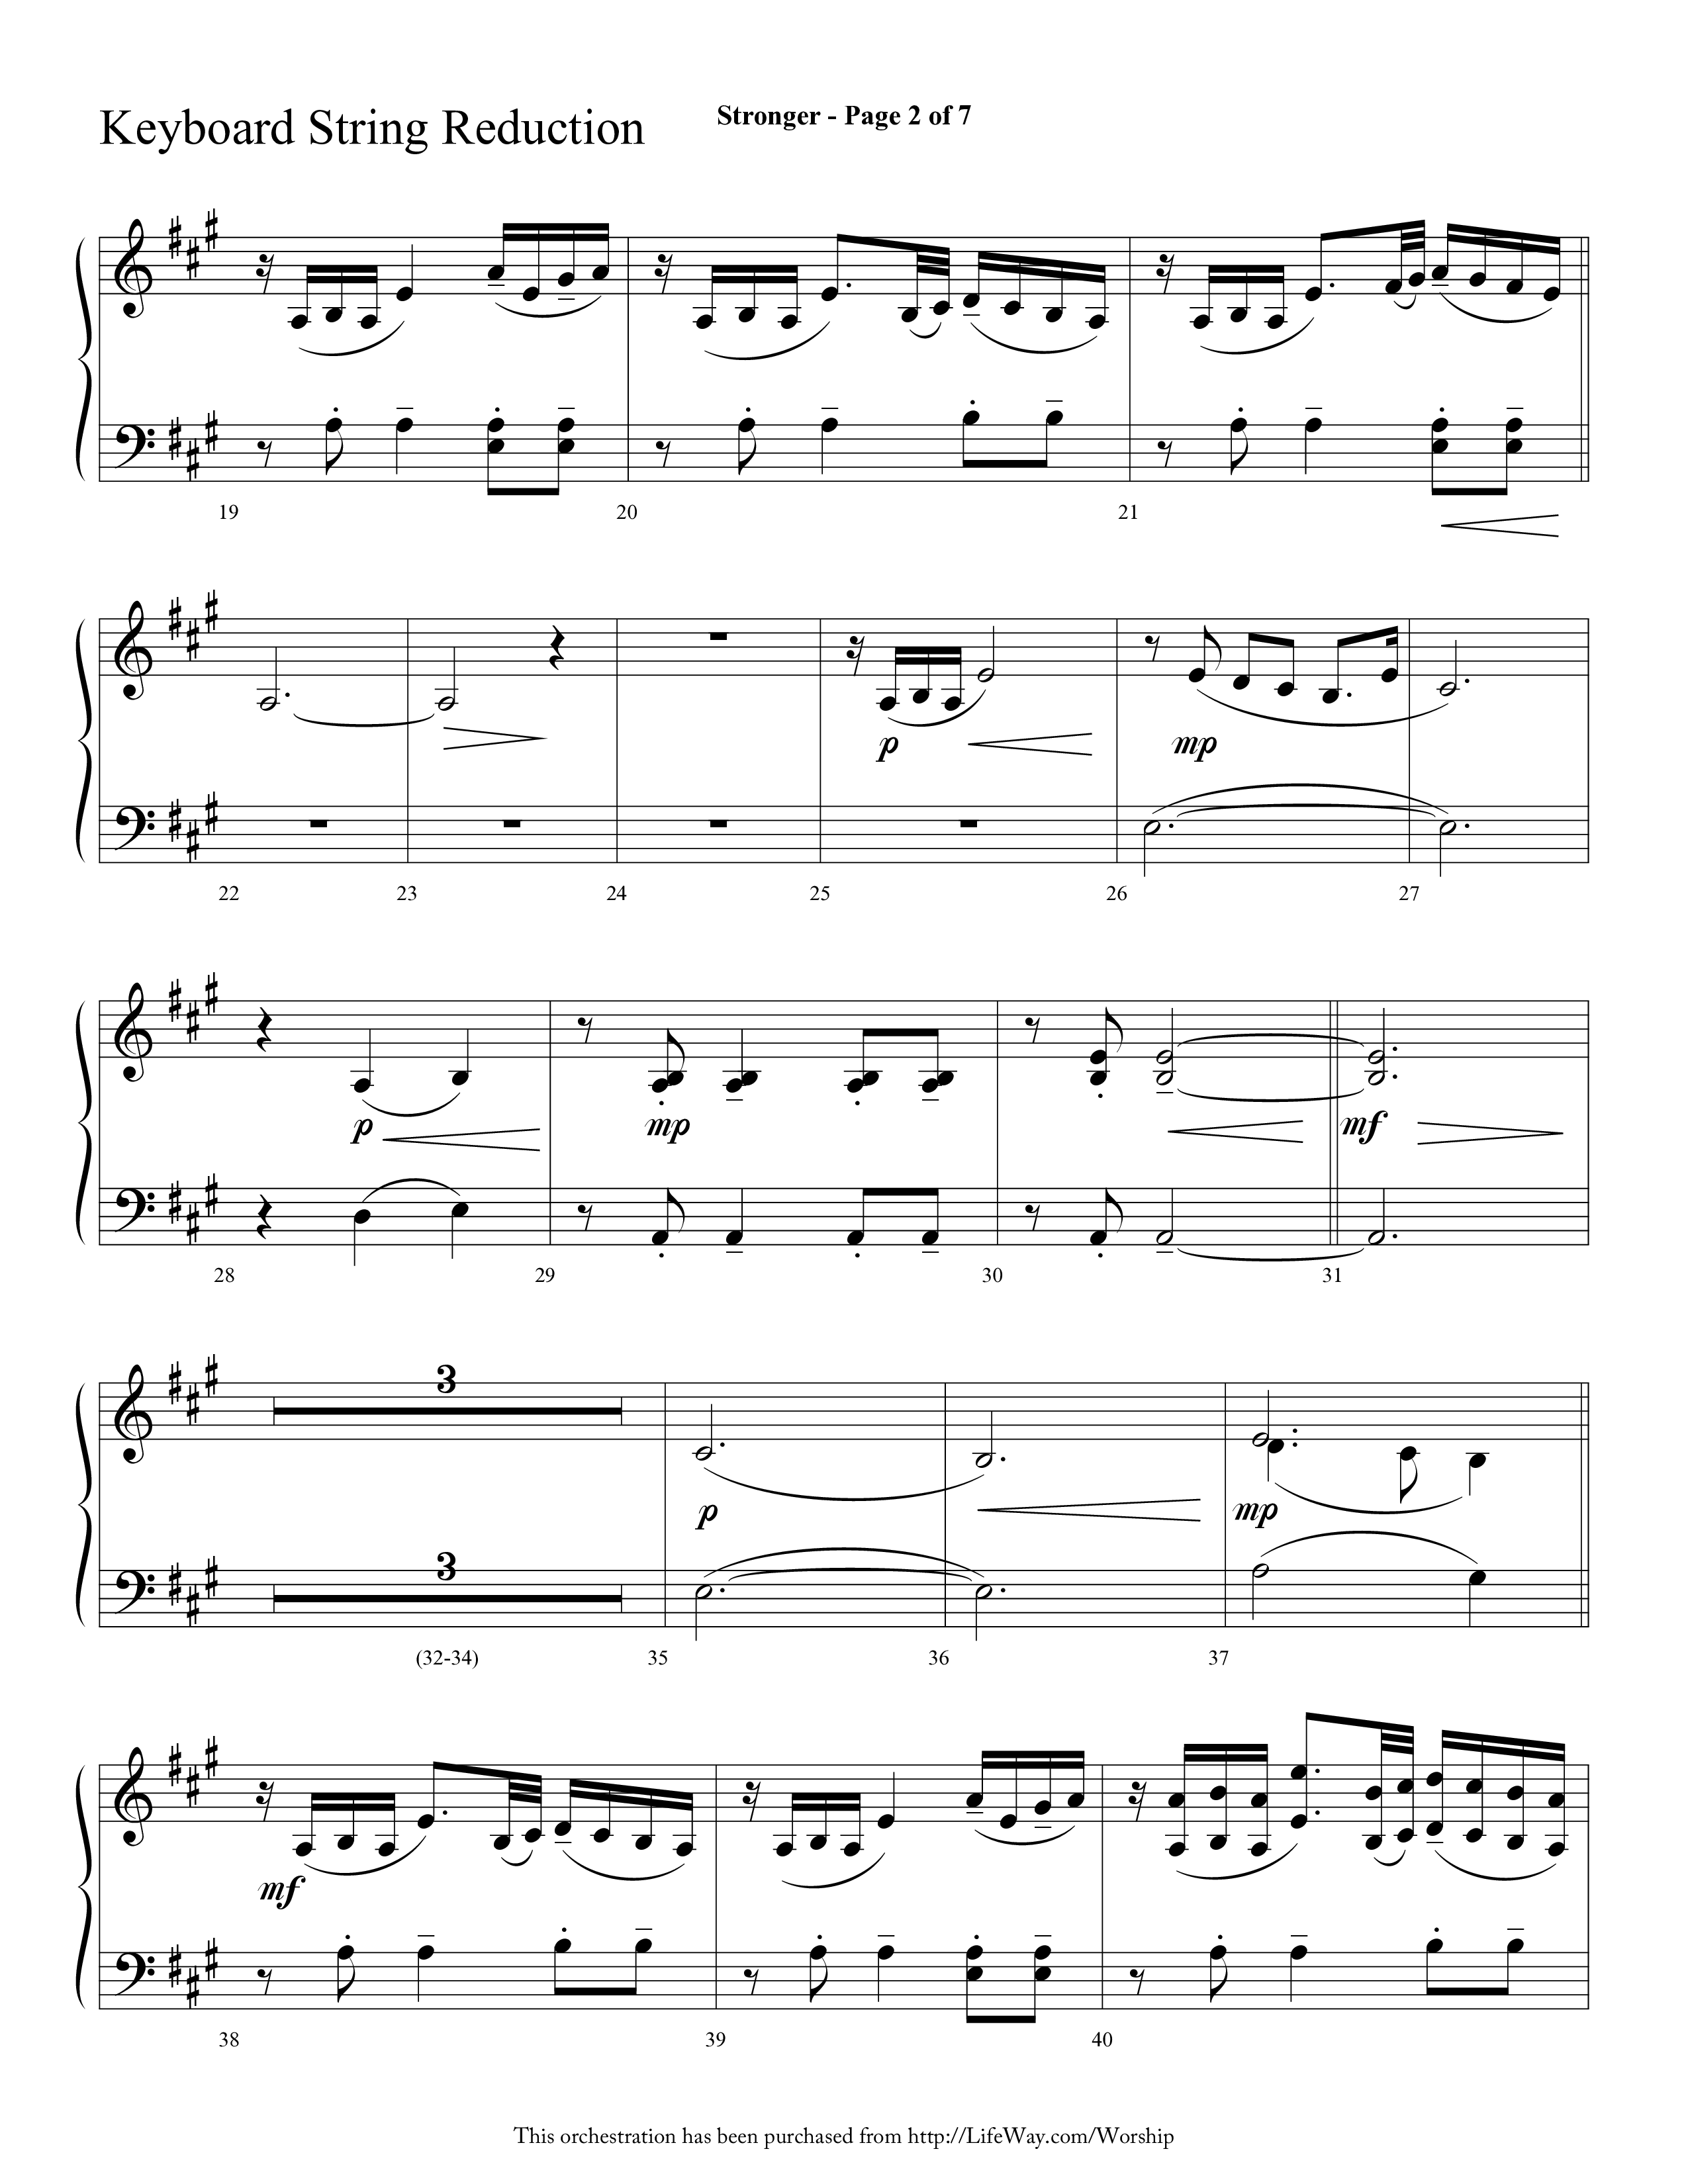 Stronger (Choral Anthem SATB) String Reduction (Lifeway Choral / Arr. Cliff Duren)